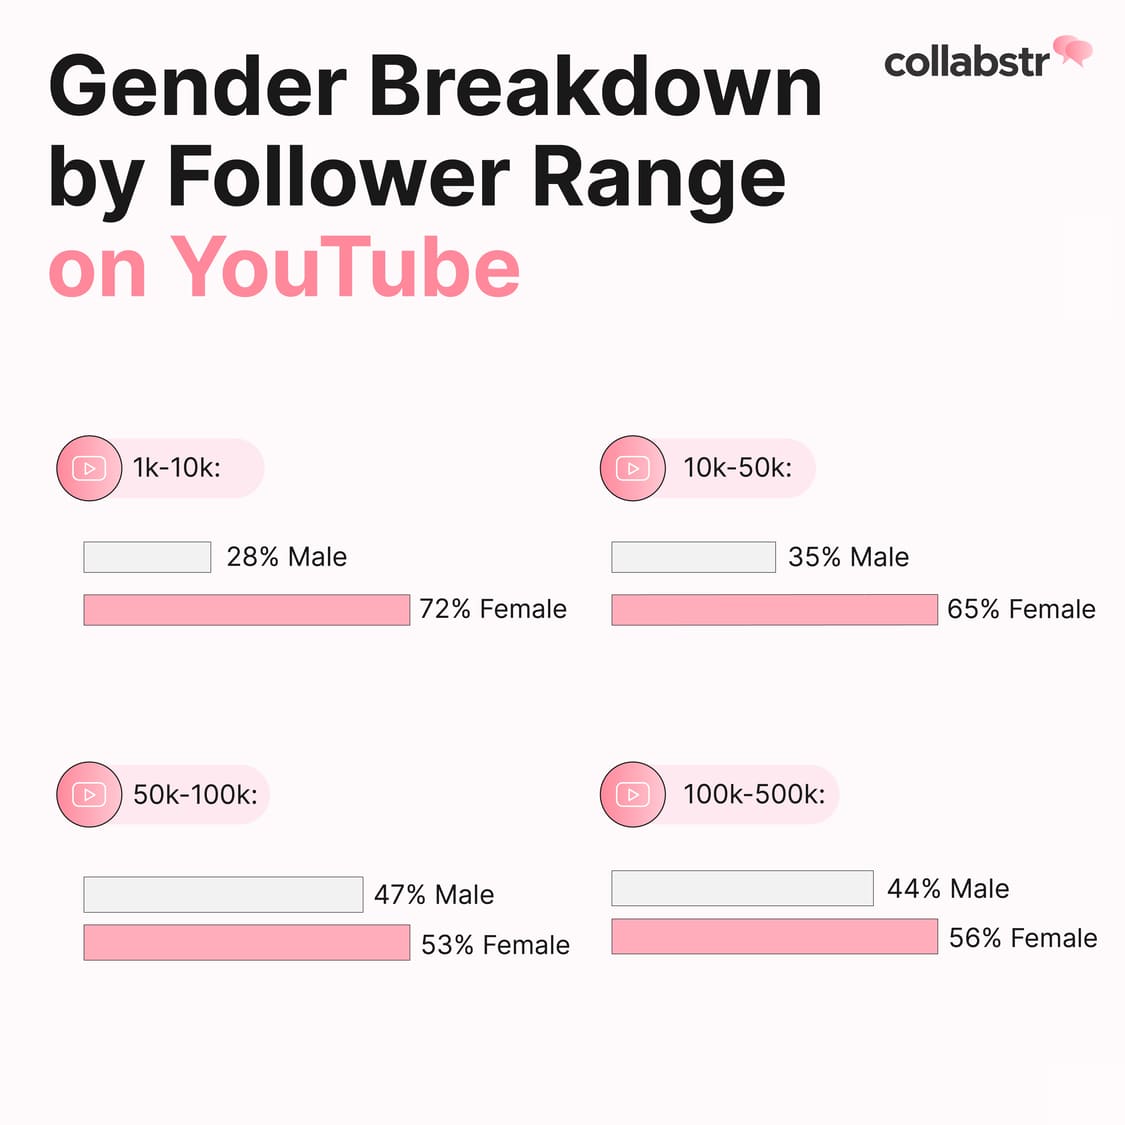 Gender breakdown of influencers on YouTube by follower range.